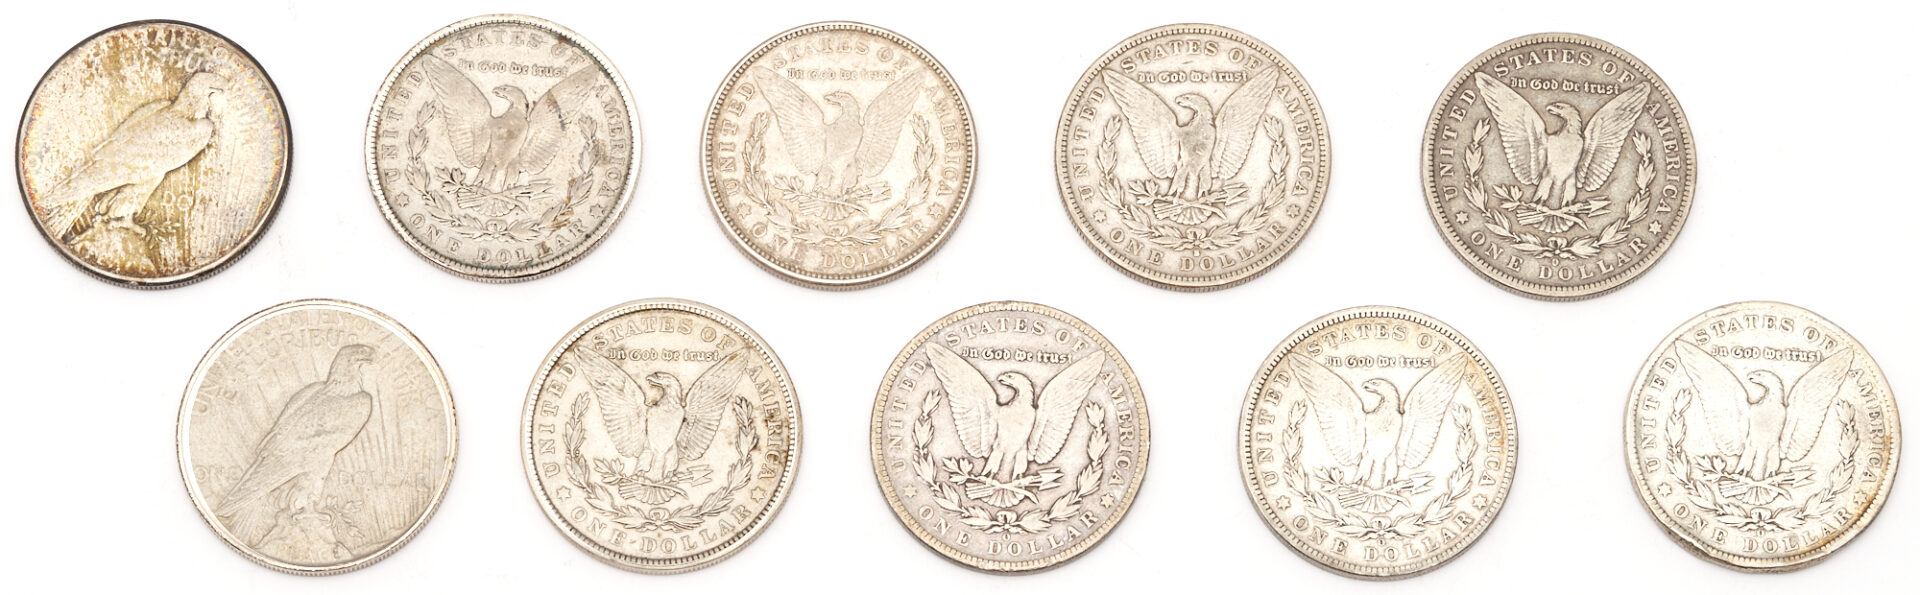 Lot 608: Group of 16 US Morgan & 4 Peace Silver Dollars, Total 20